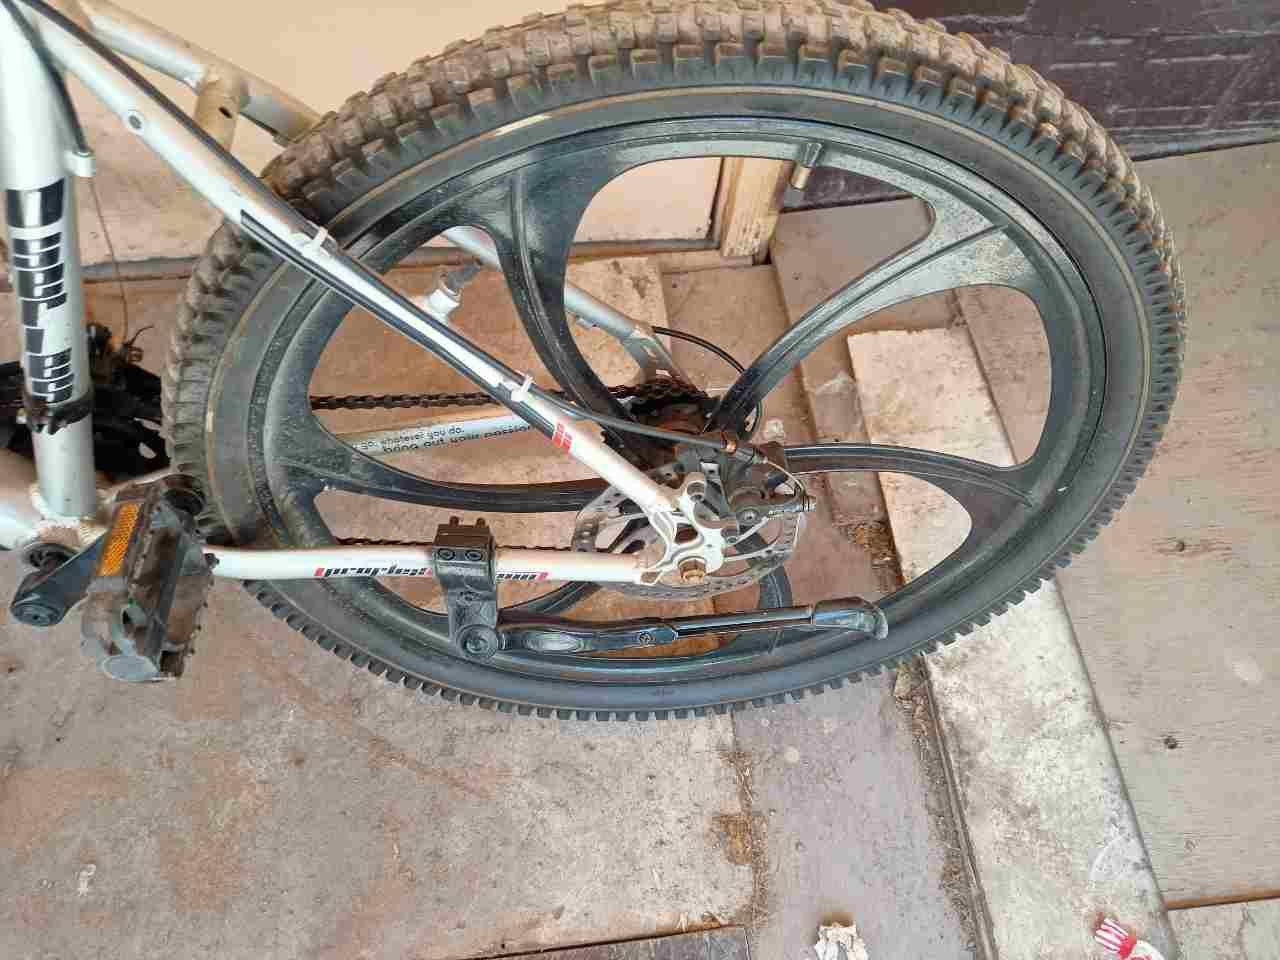 Велосипед сотилади,алюмин рама енгил,сака диска 26 размер